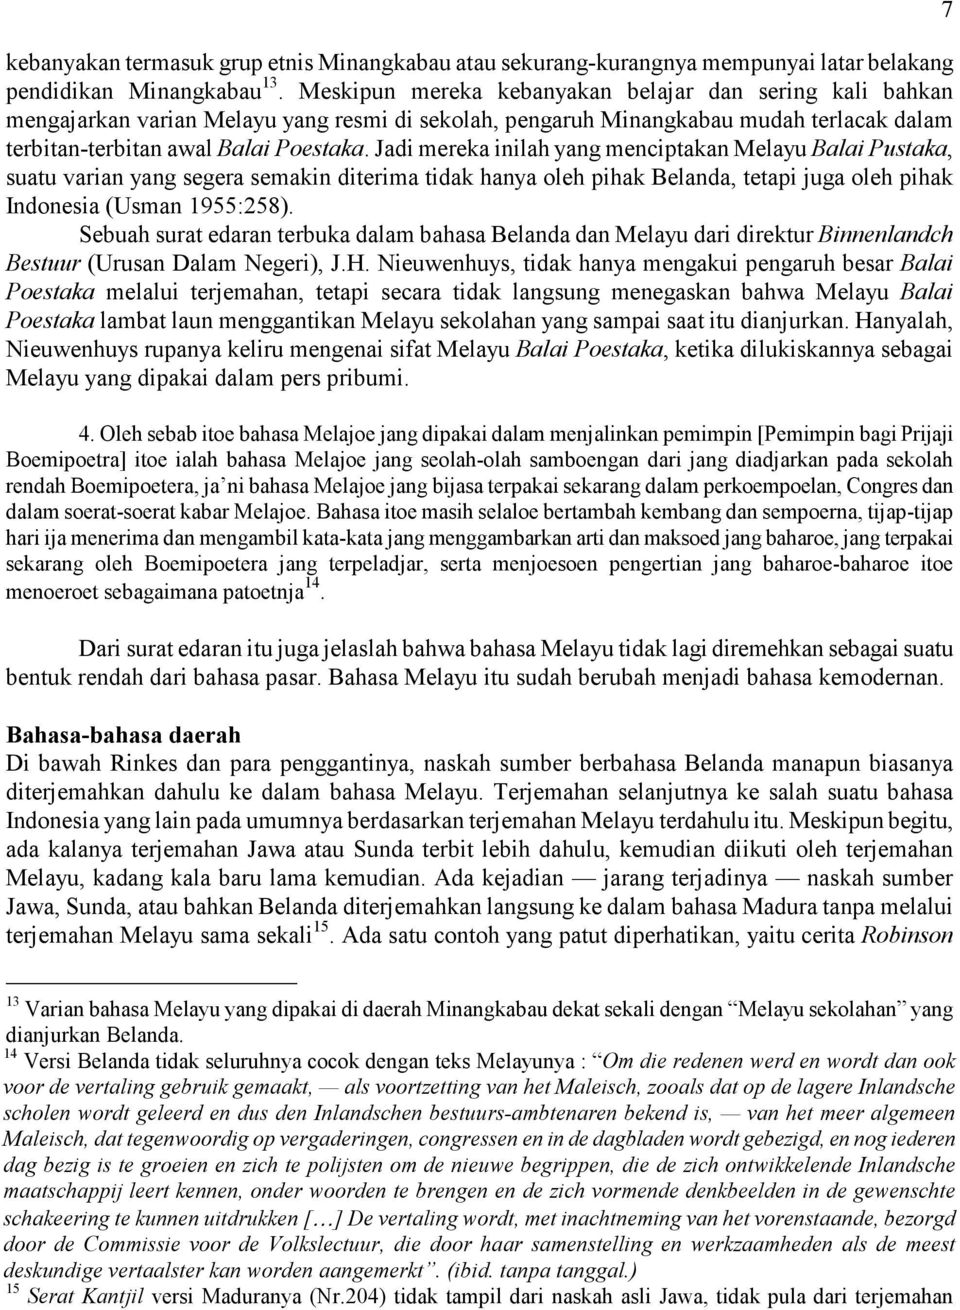 Jadi mereka inilah yang menciptakan Melayu Balai Pustaka, suatu varian yang segera semakin diterima tidak hanya oleh pihak Belanda, tetapi juga oleh pihak Indonesia (Usman 1955:258).